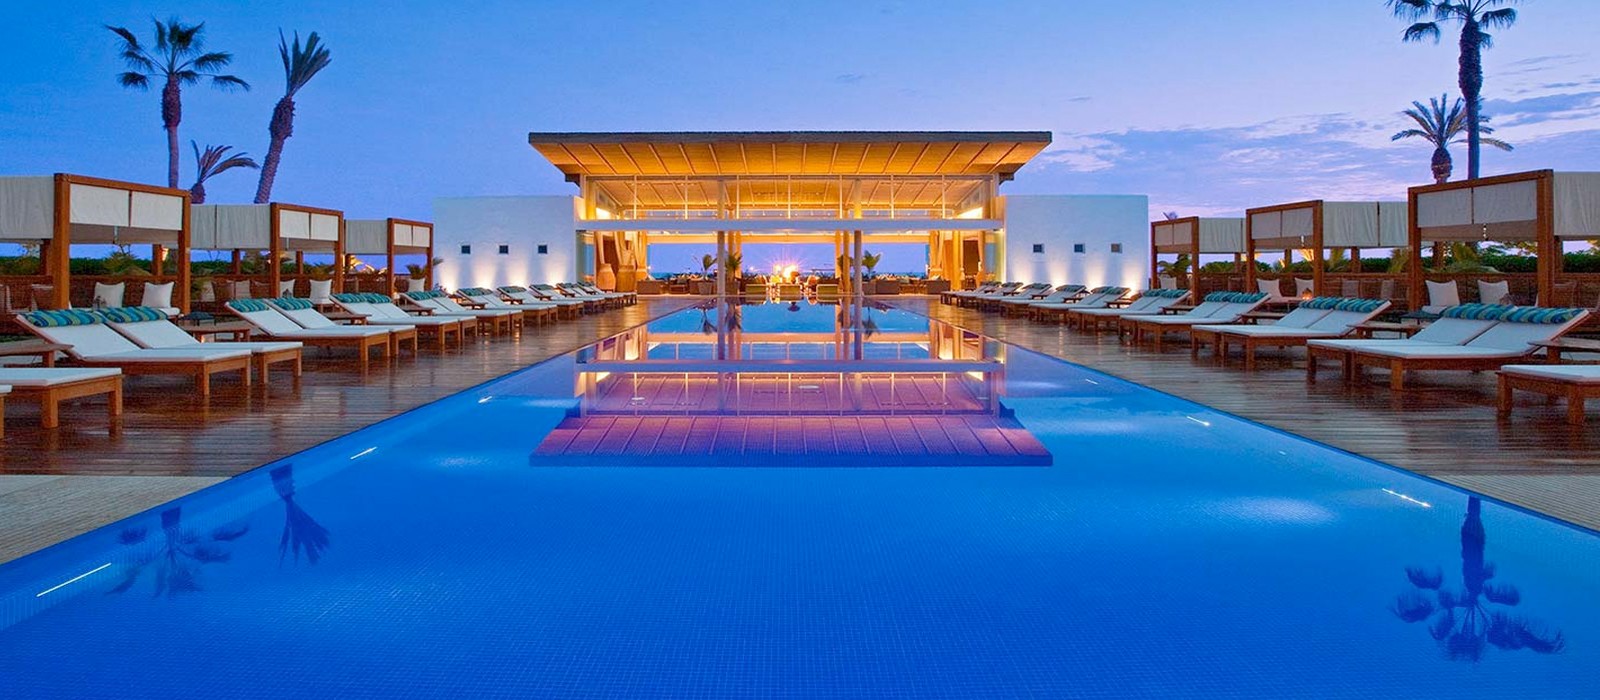 header - Paracas Hotel A Luxury Collection - Luxury Peru Holidays